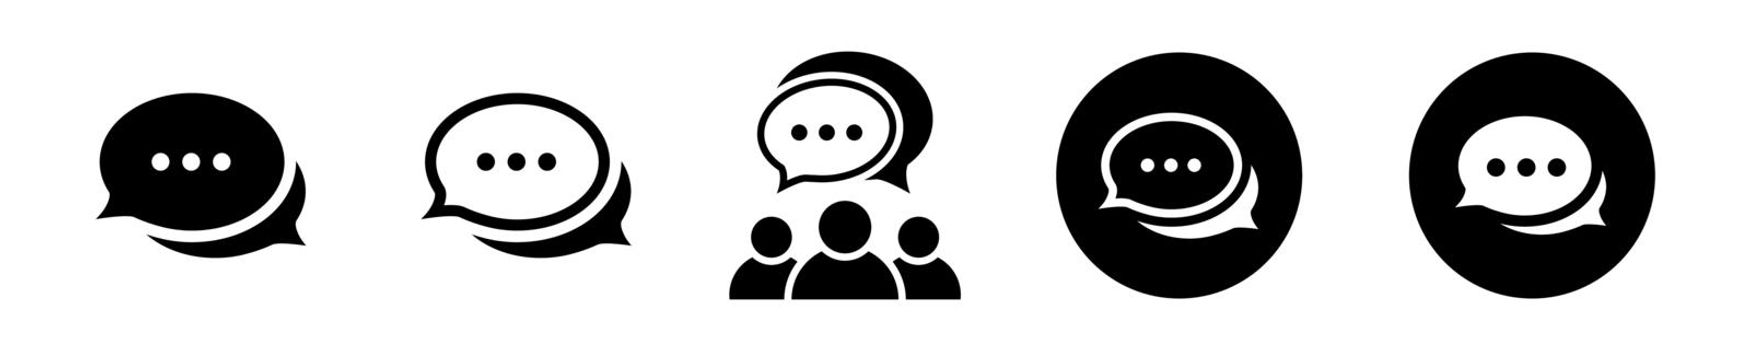 Talk bubble icon set in flat Speech bubble symbols